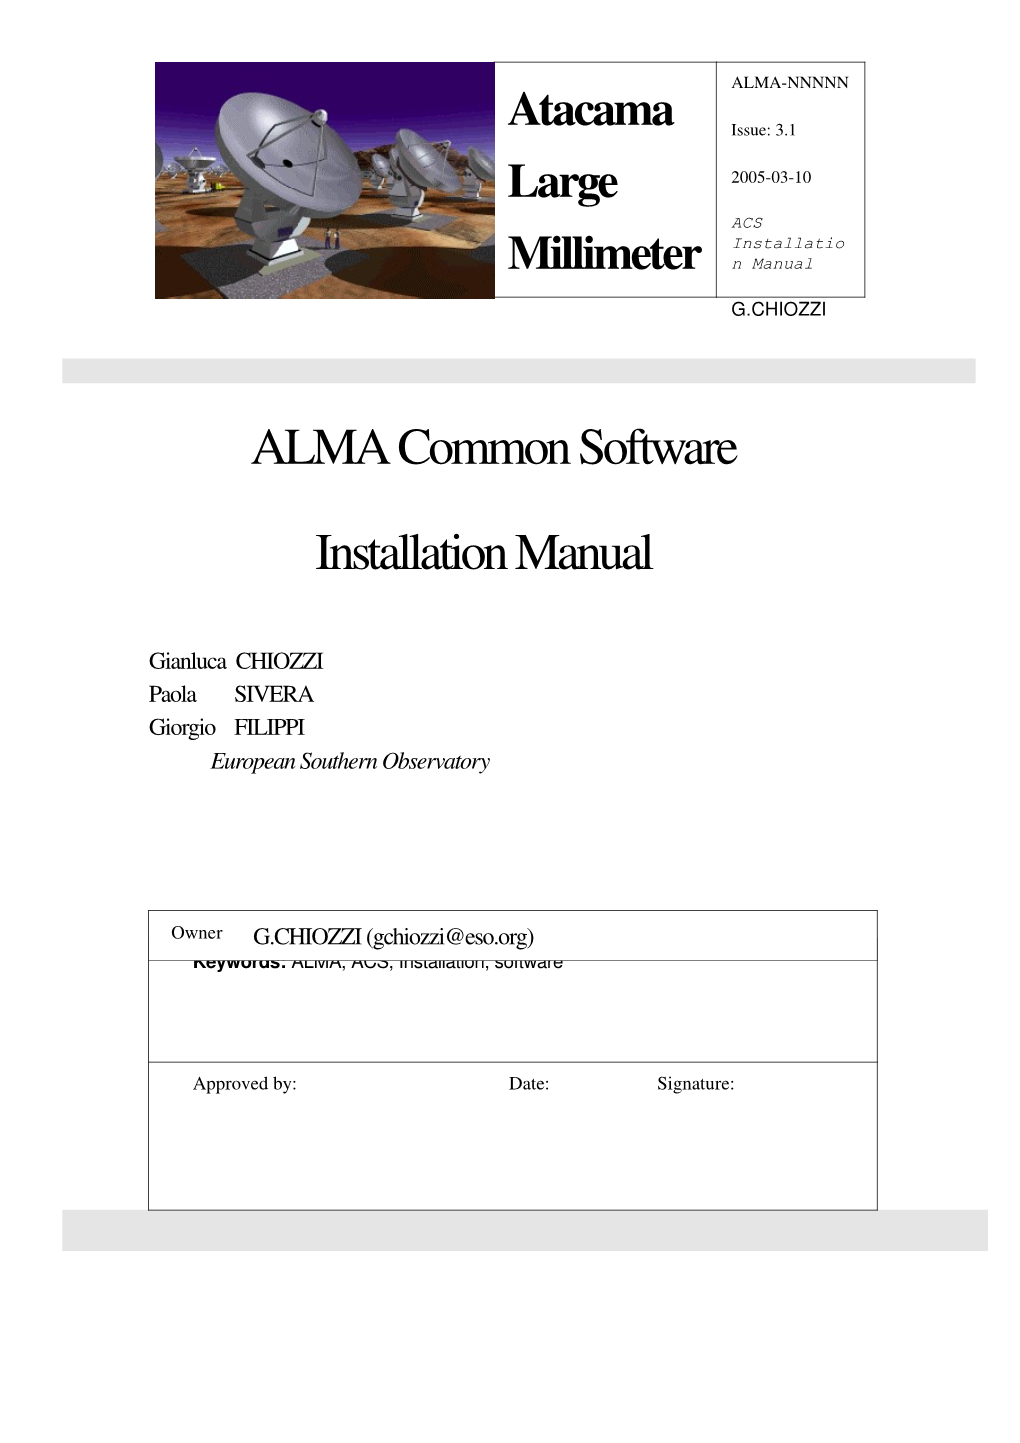 ACS Installation Manual